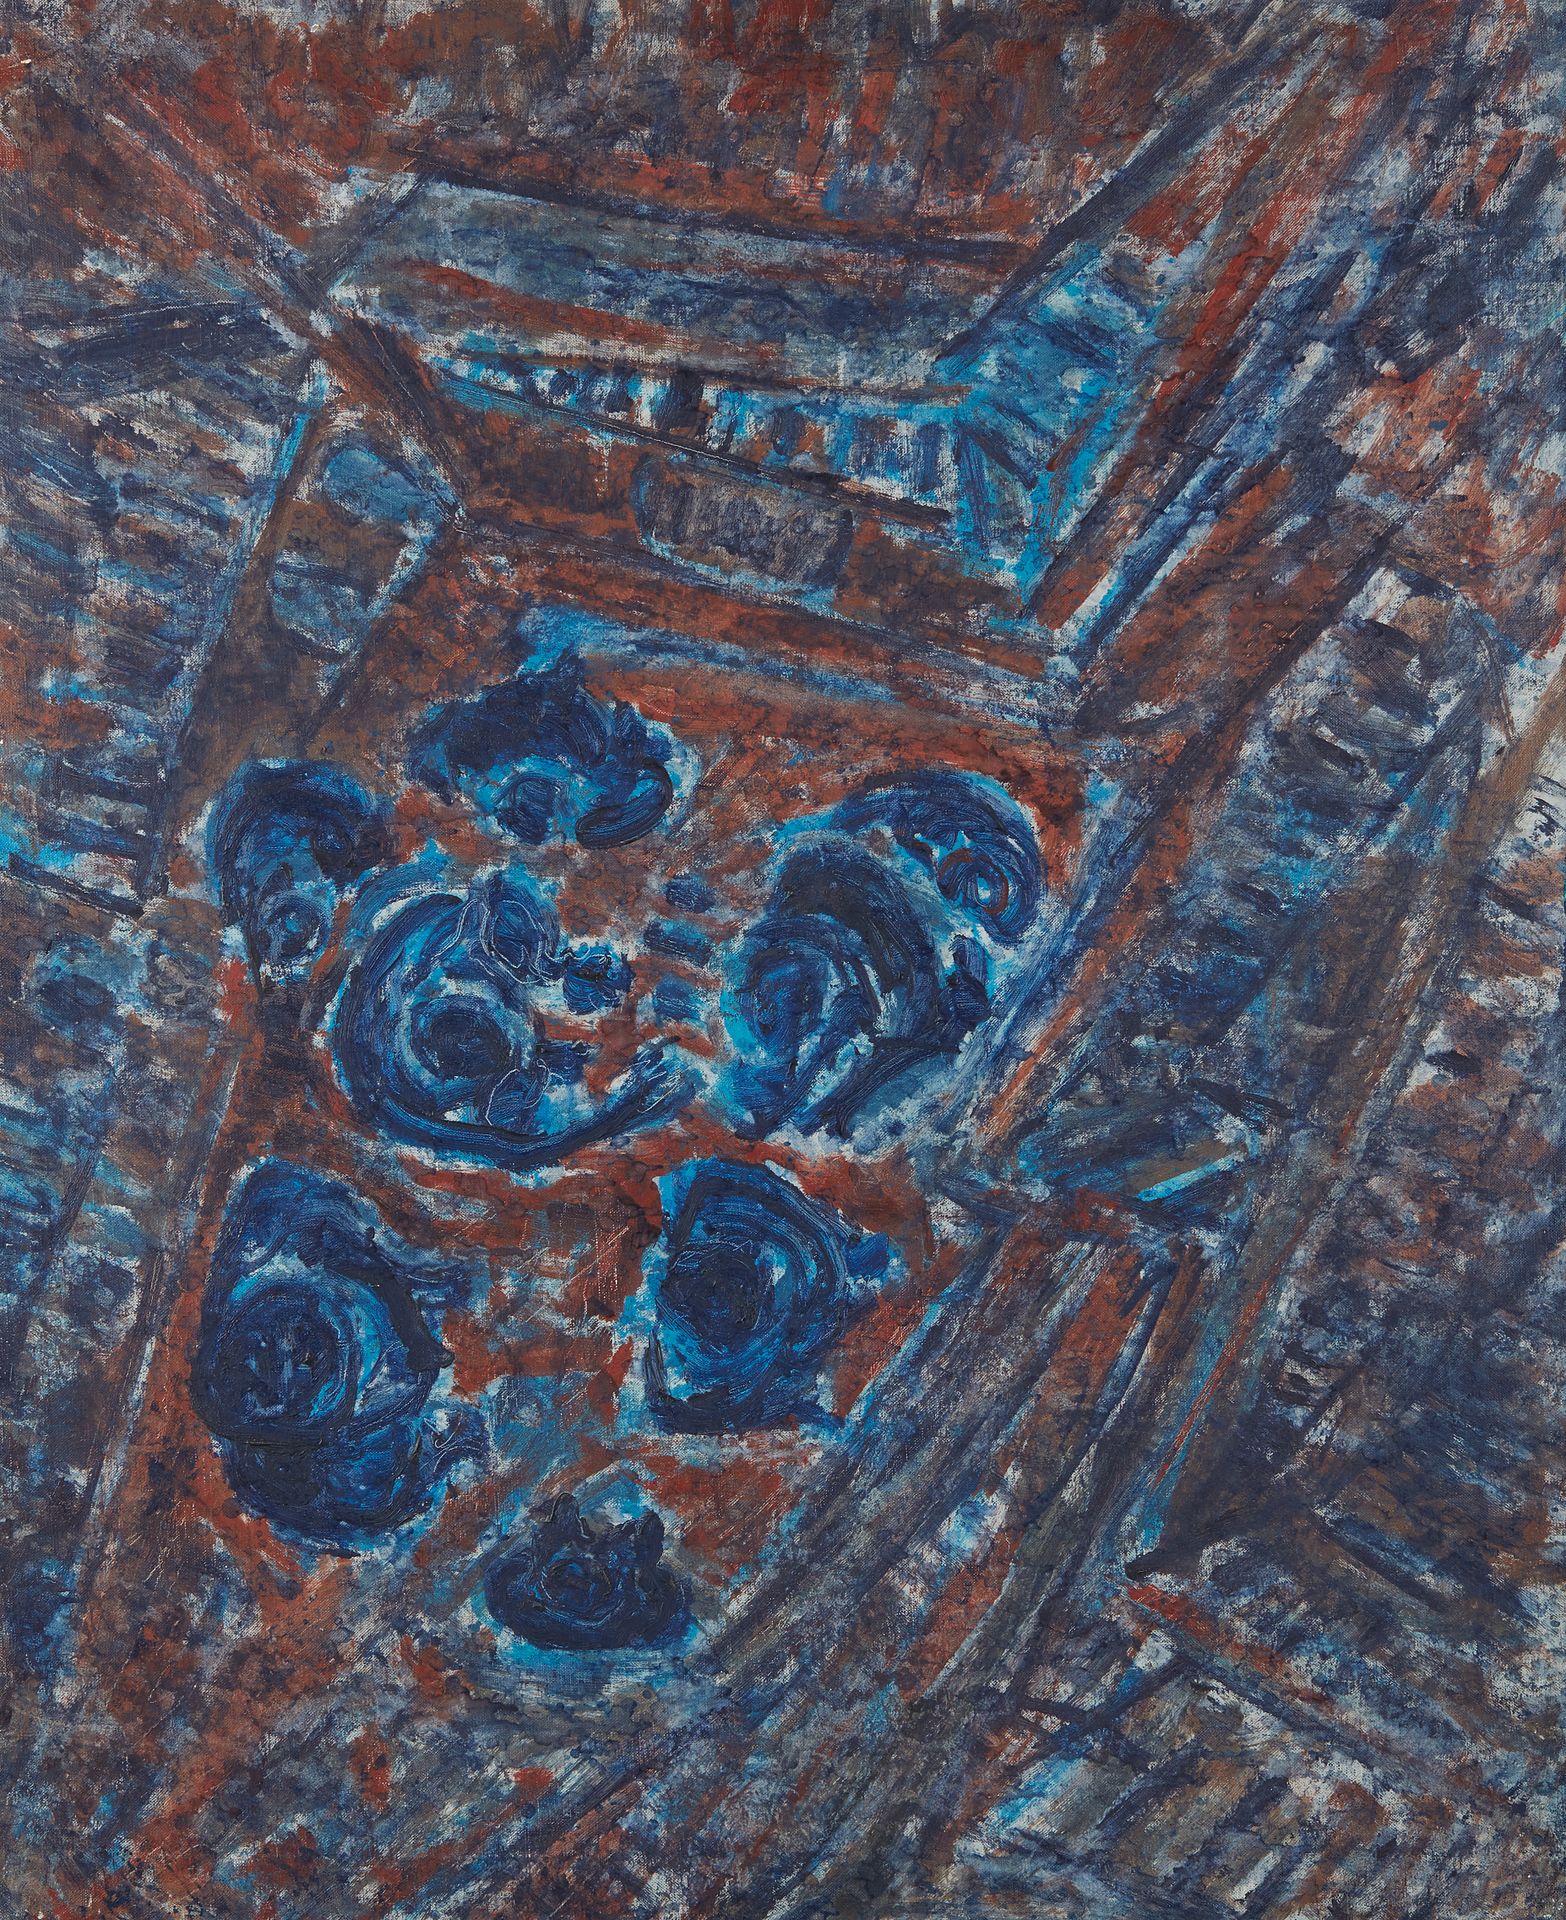 Null 路易斯-克拉蒙特（1951-2000）

Jugadors, 1984

布面油画。

右上方有签名和日期。

81 x 100厘米。

标签粘在框架&hellip;